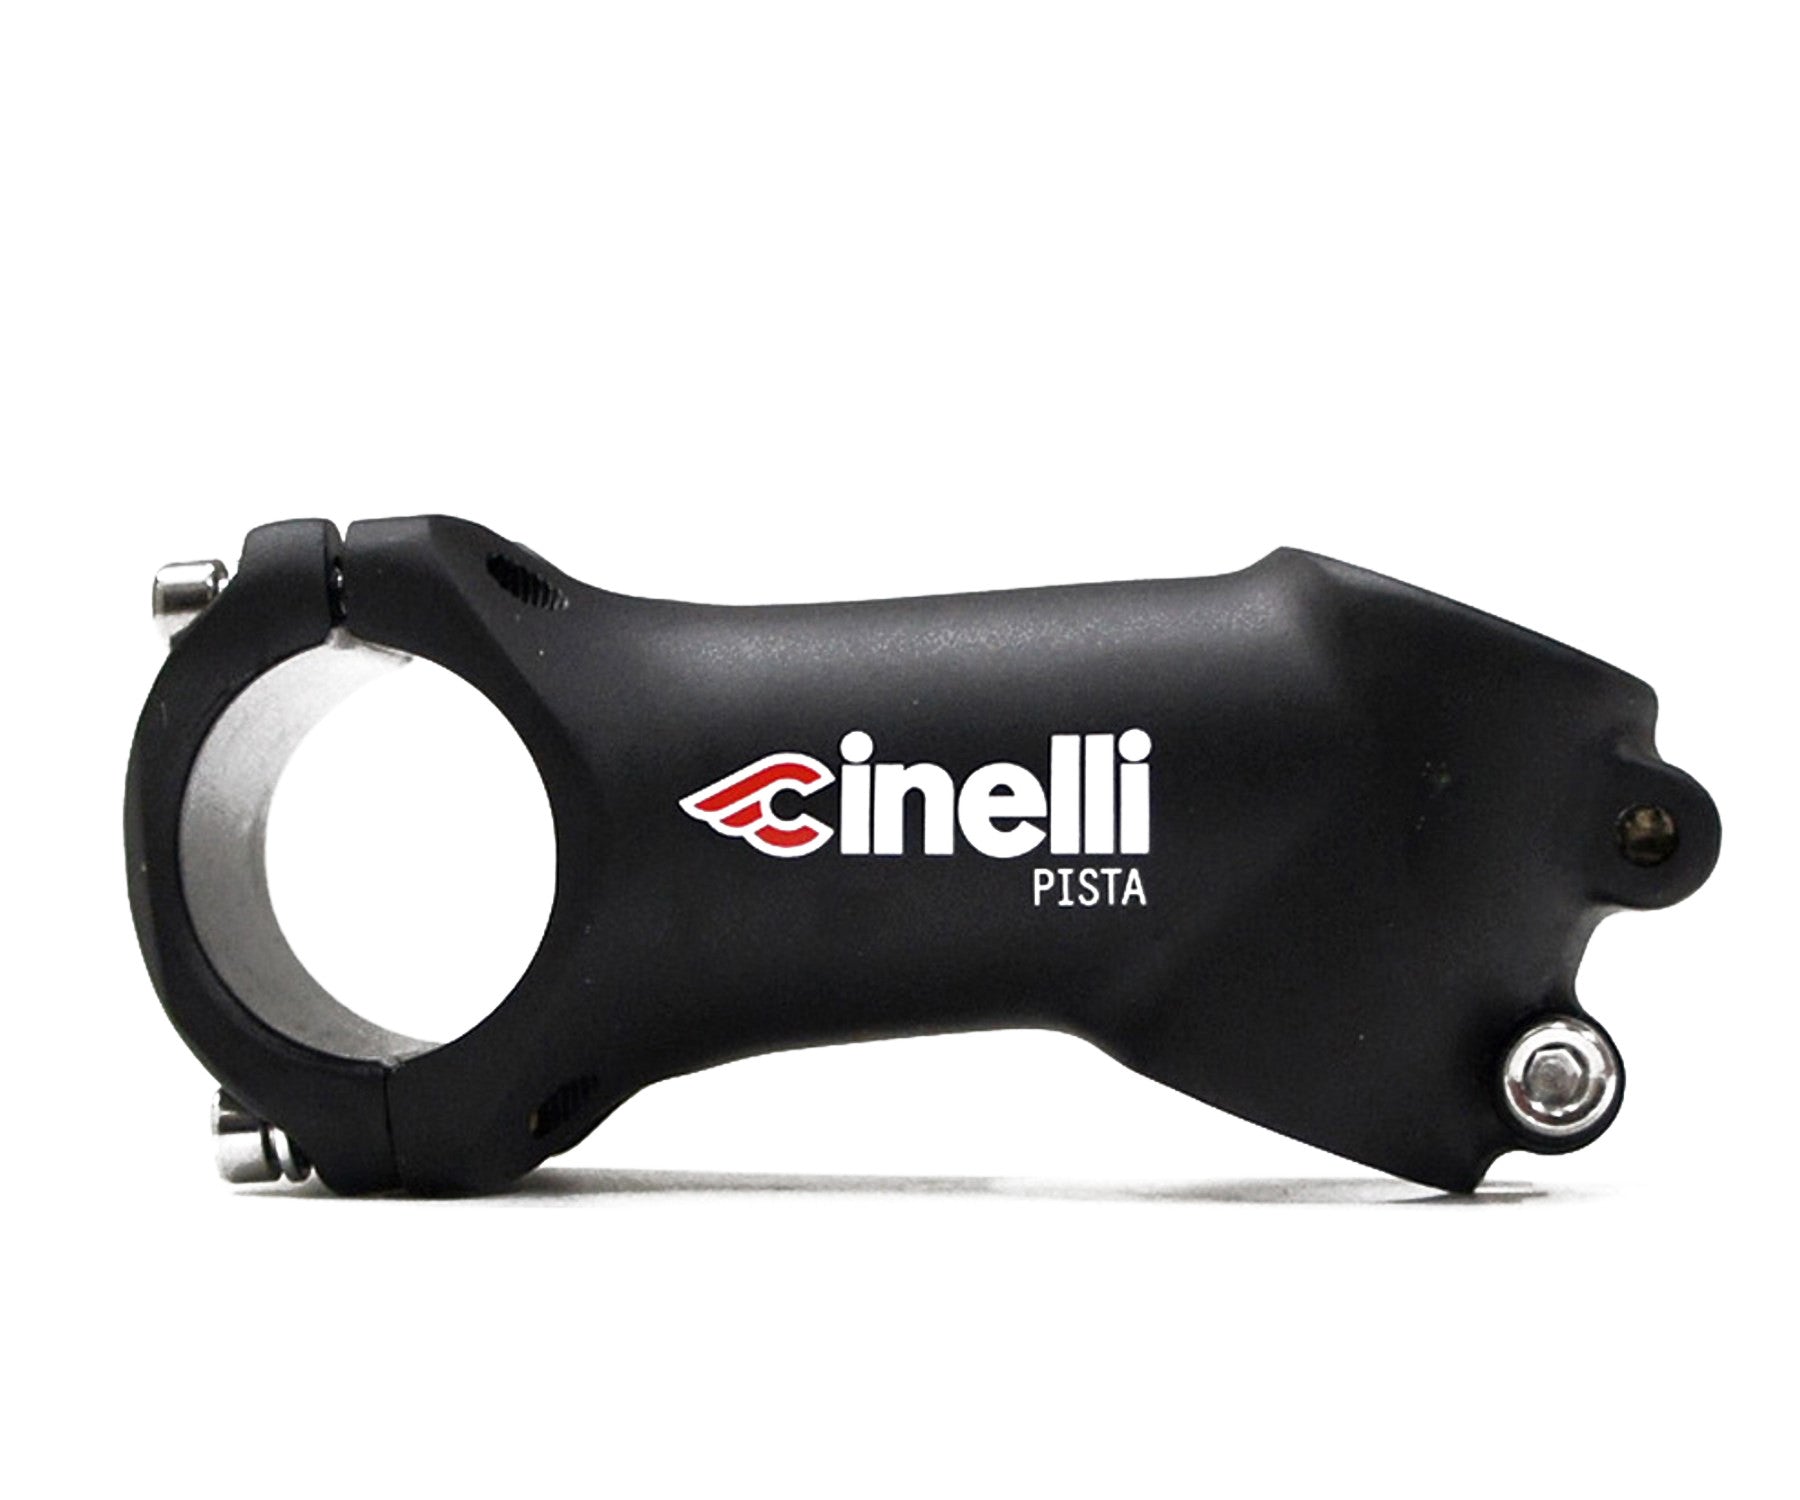 Cinelli Pista stem - Retrogression Fixed Gear